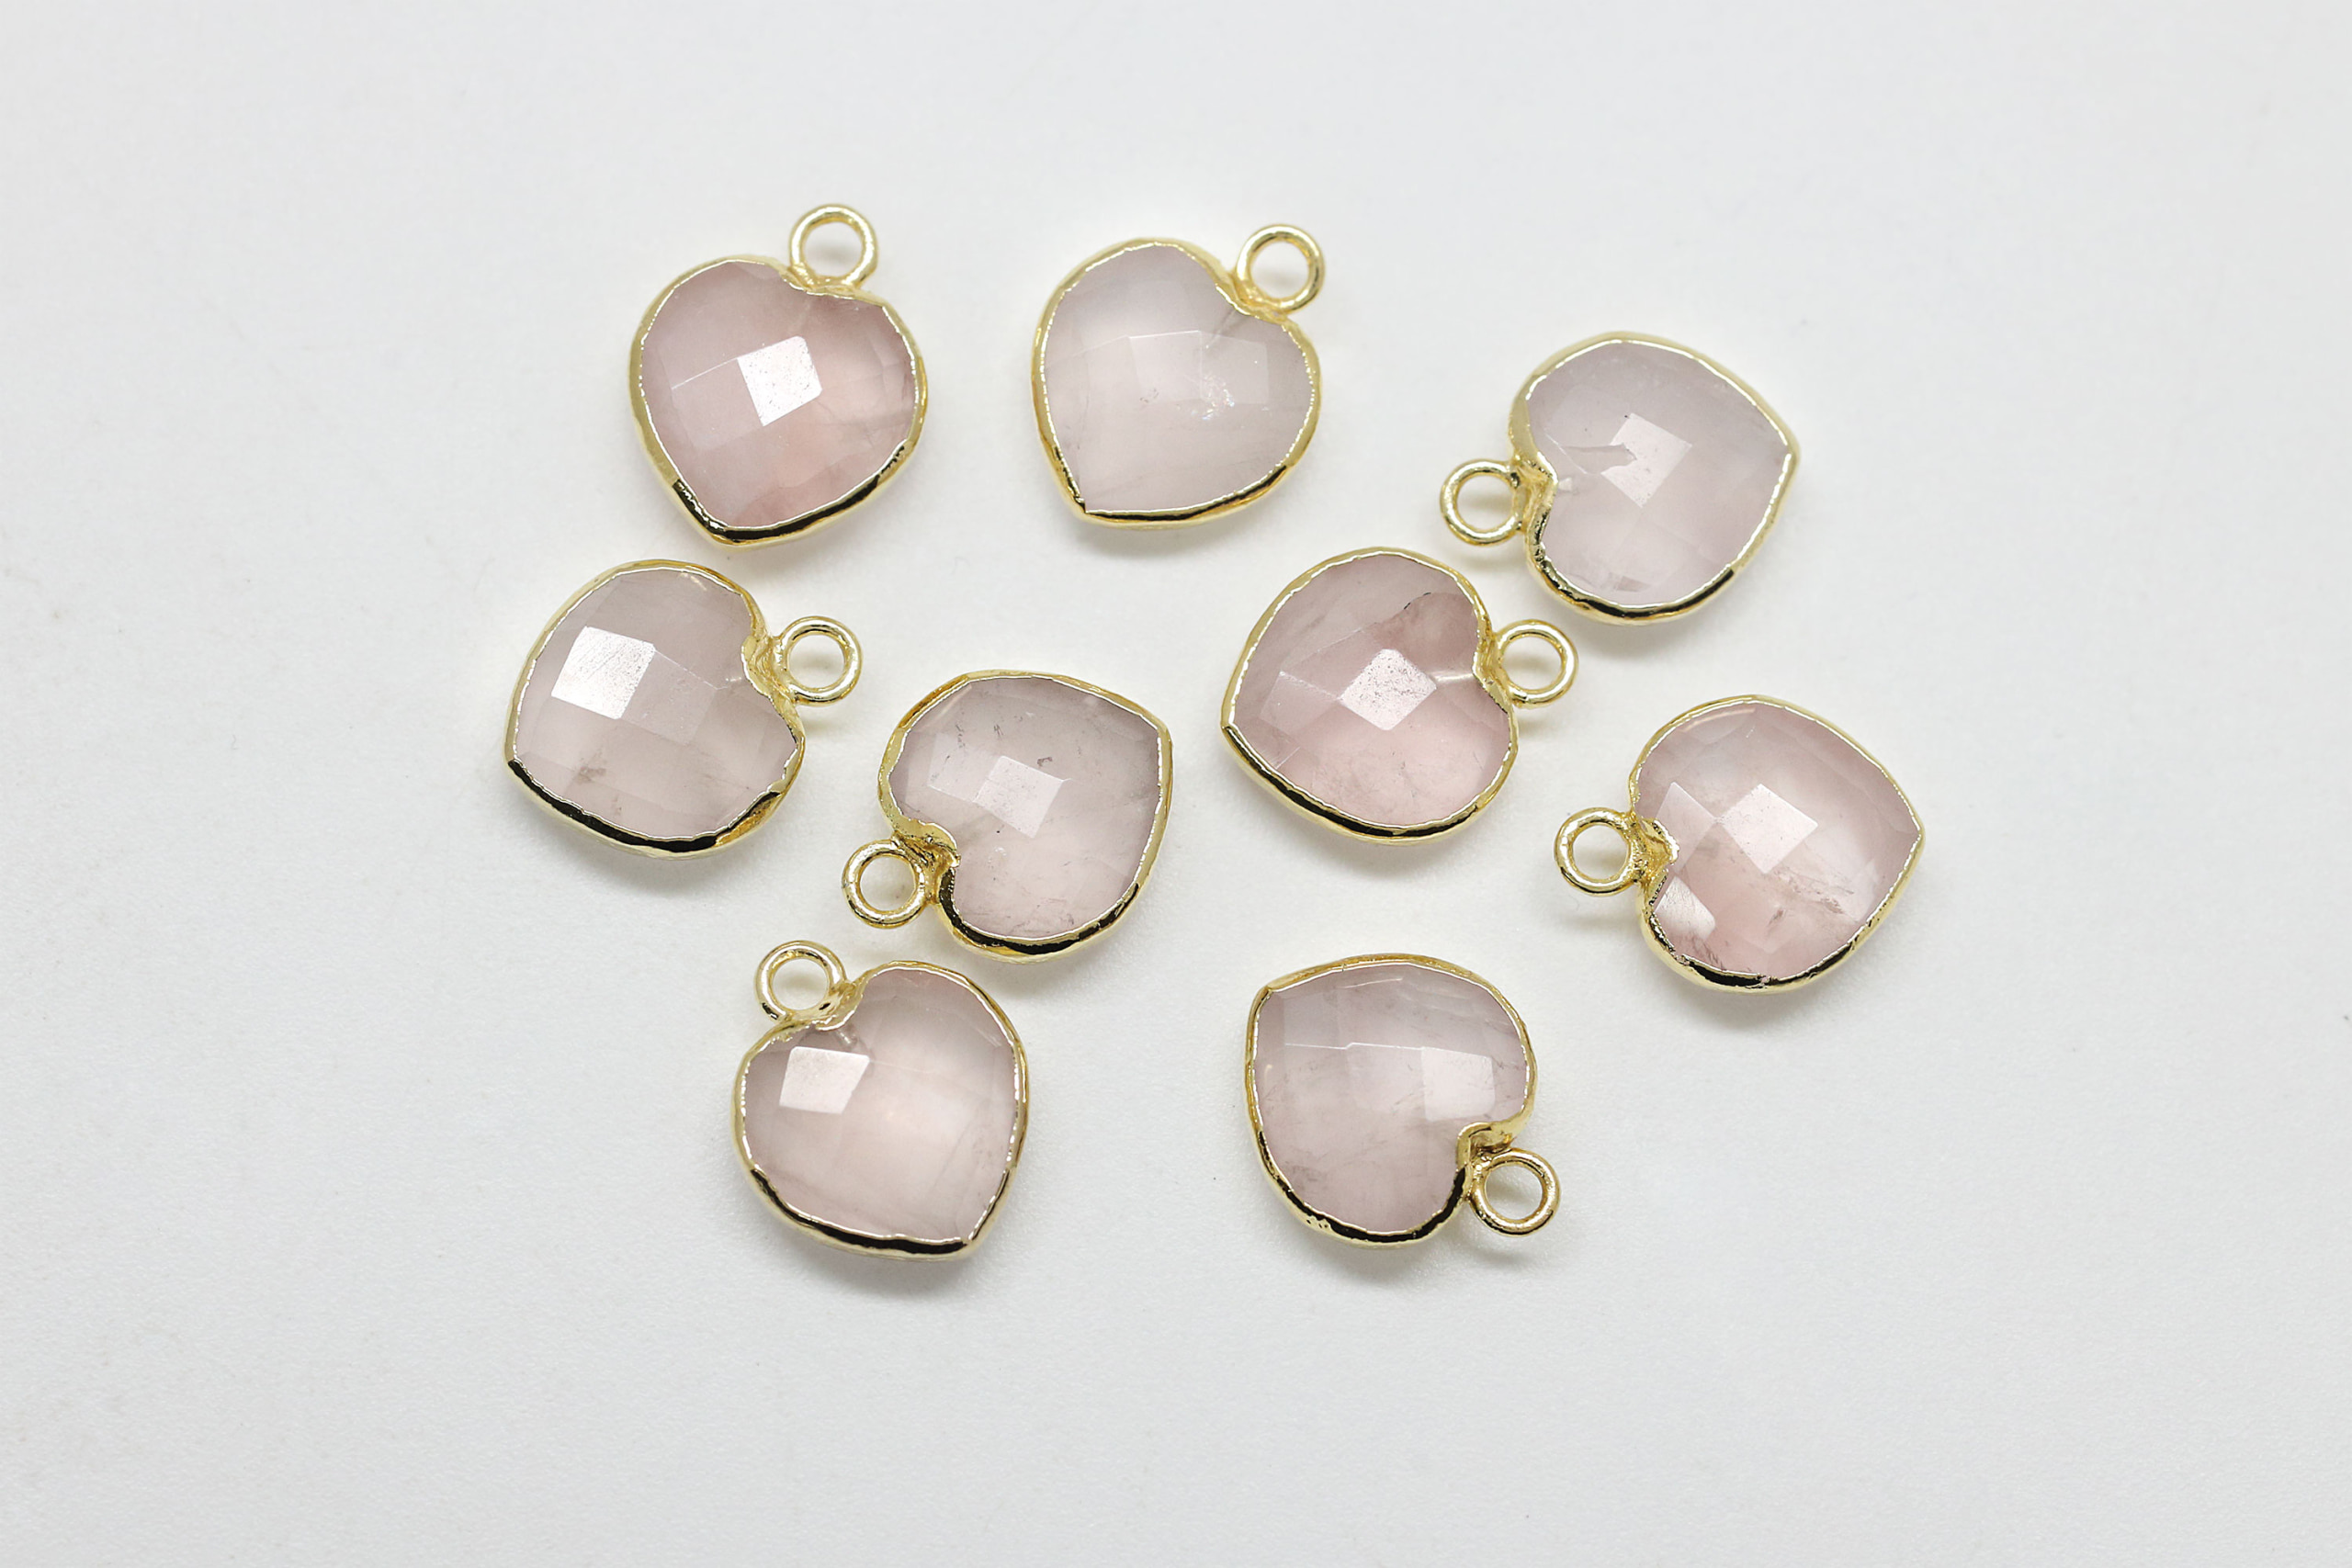 [N48-R5] Heart gemstone charm (Rose quartz), Gold plated 925 silver &amp; copper, Gemstone, Nickel free, Jewelry making supplies, 1 piece